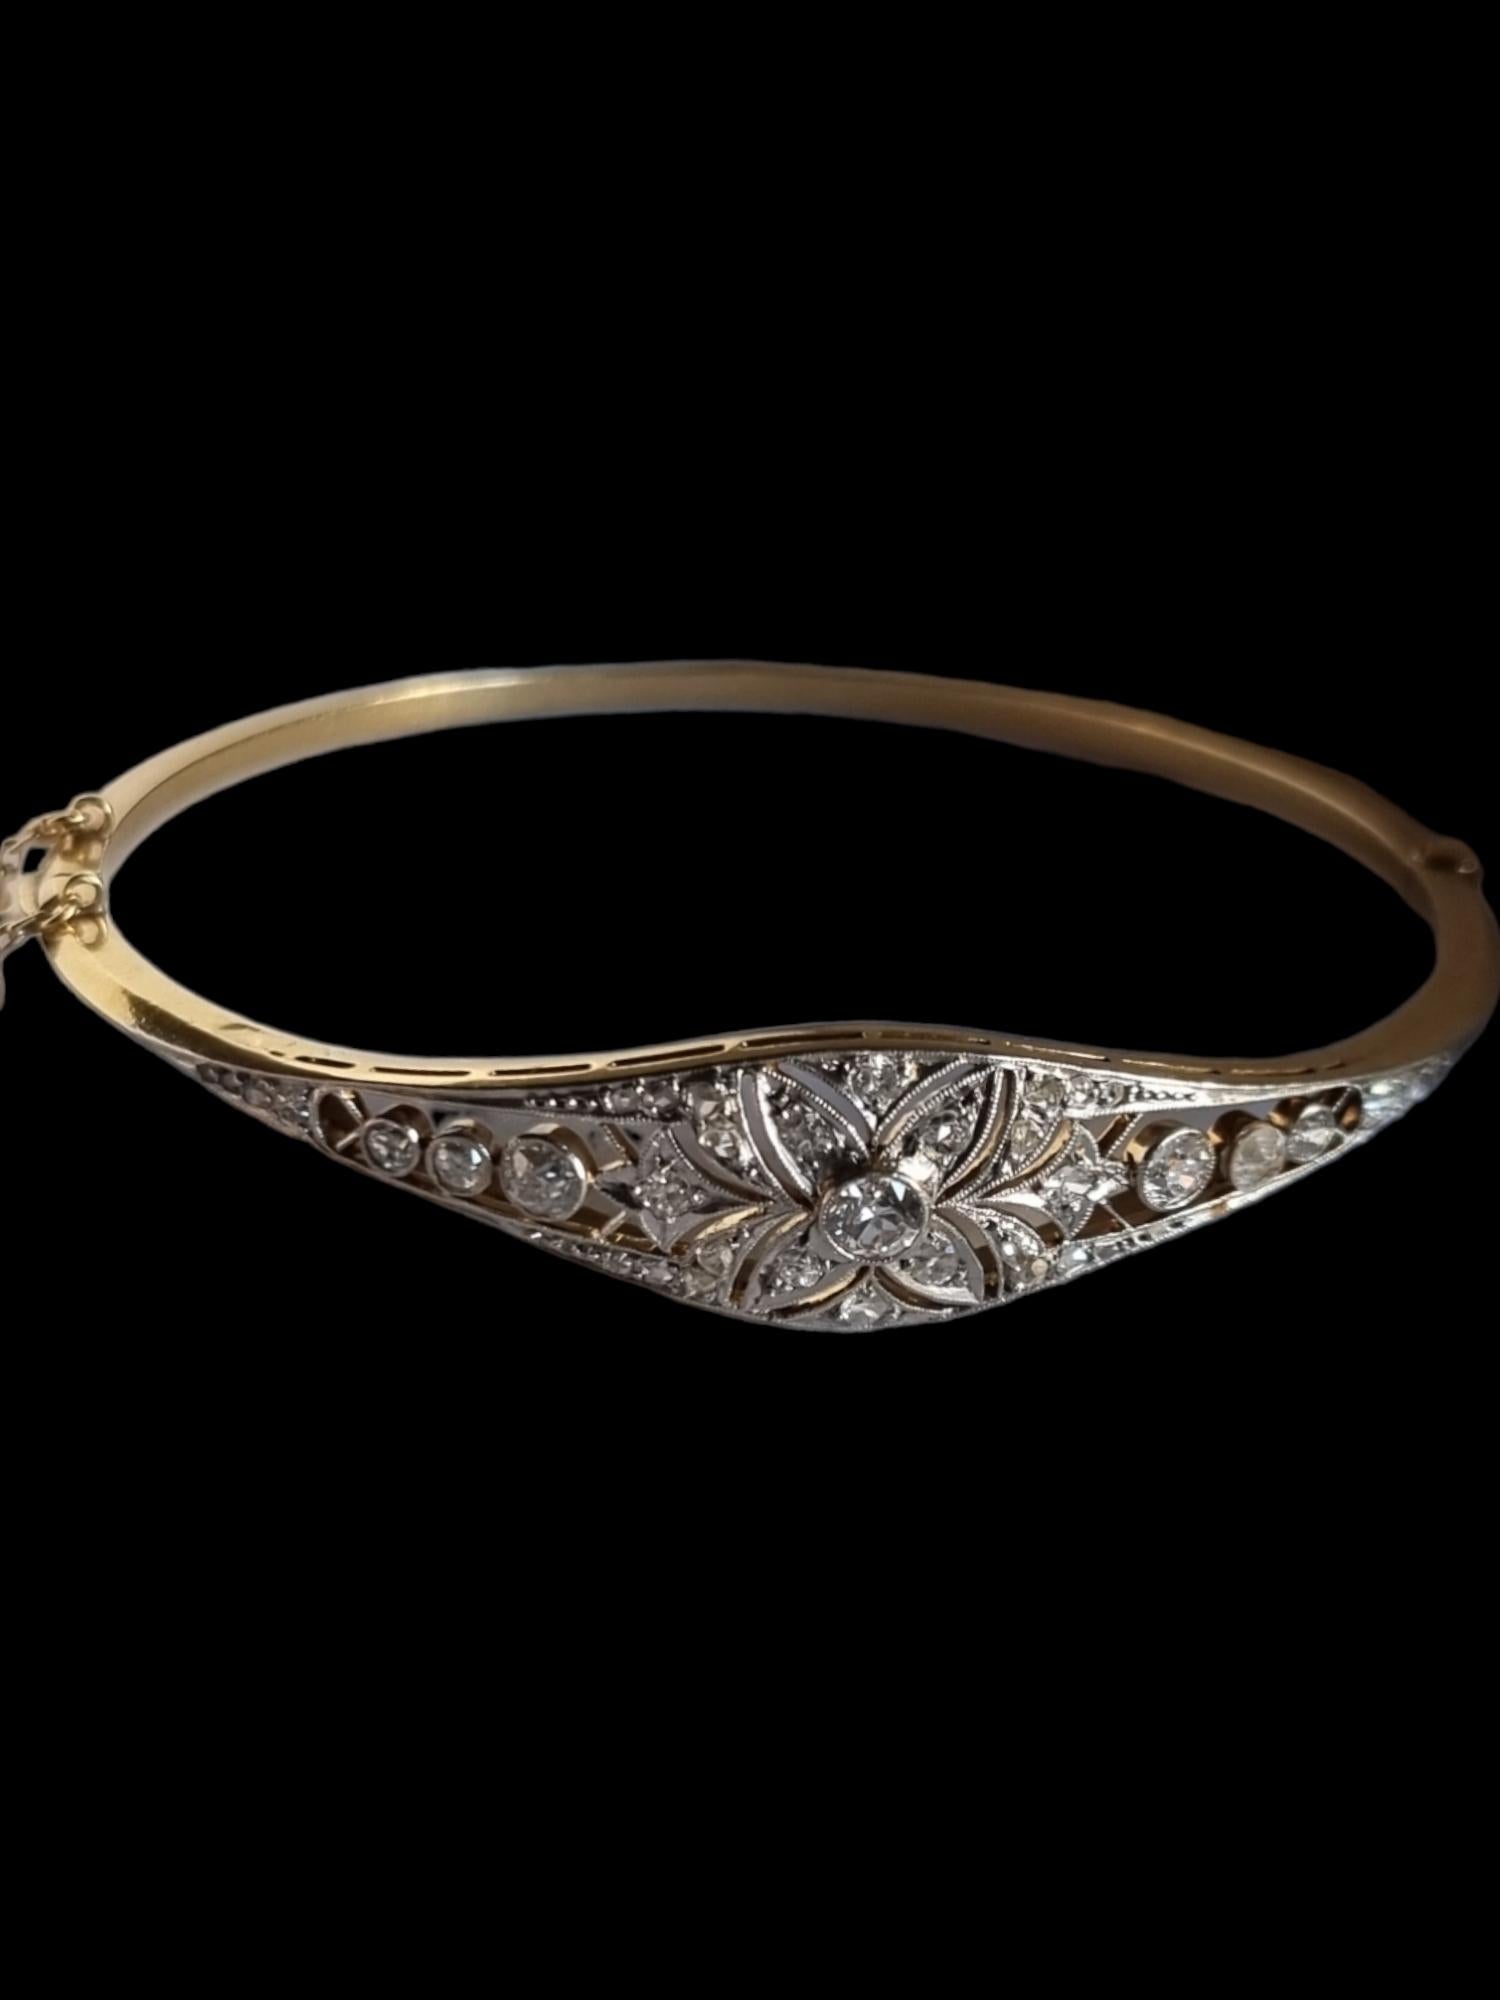 Antique Edwardian Diamond Bangle Bracelet (1901 - 1915) For Sale 3